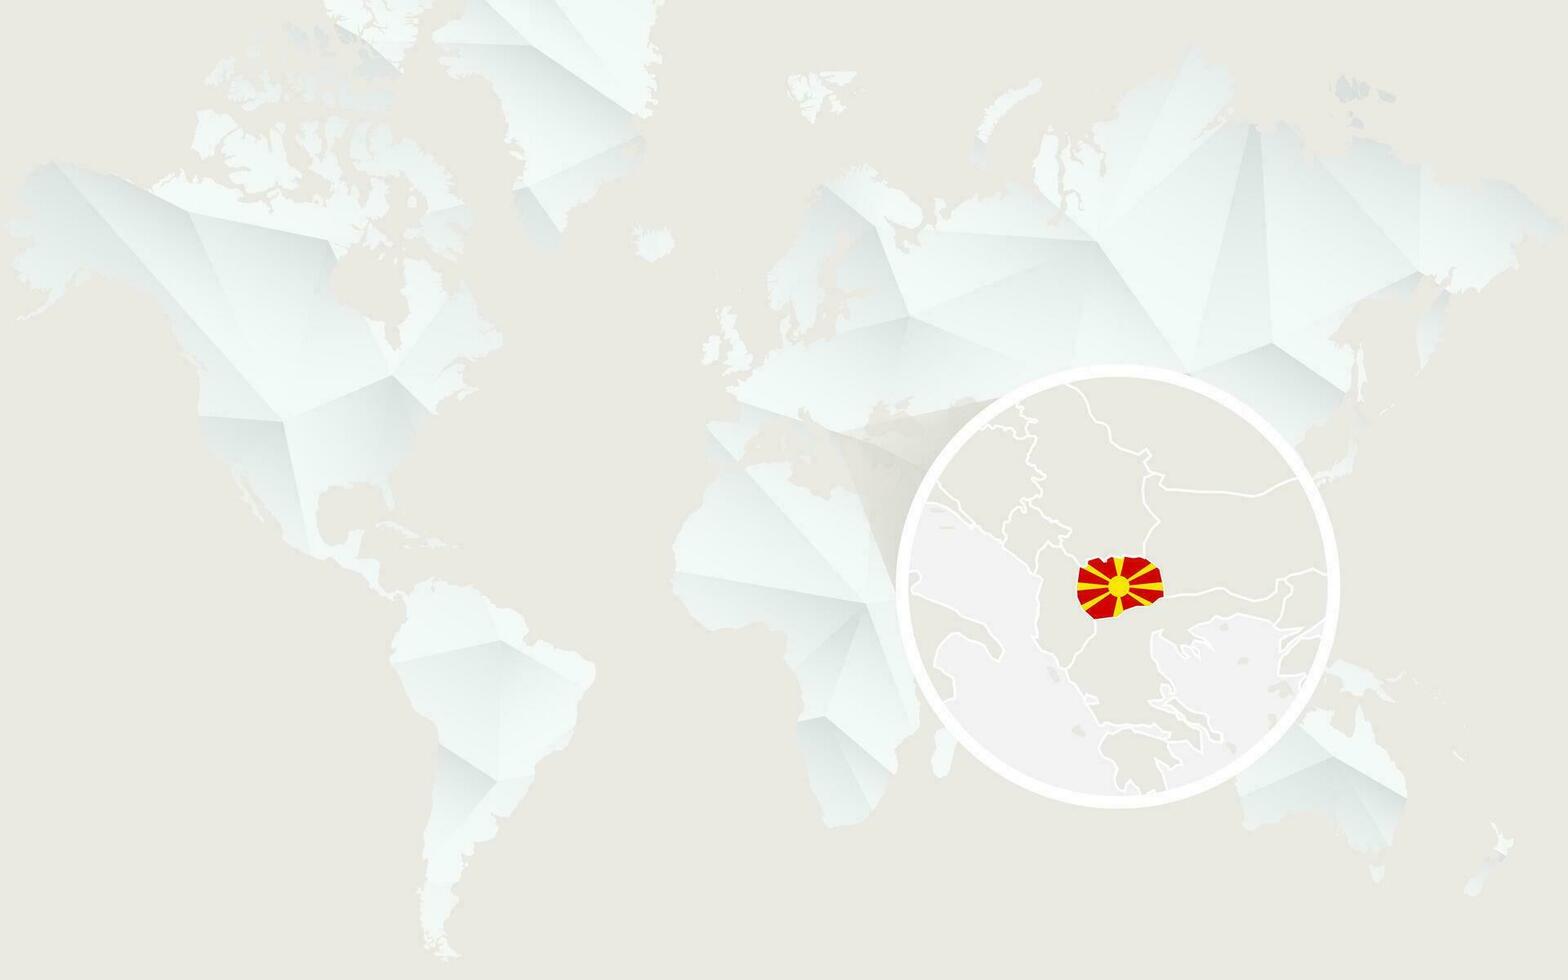 macedonia mapa con bandera en contorno en blanco poligonal mundo mapa. vector